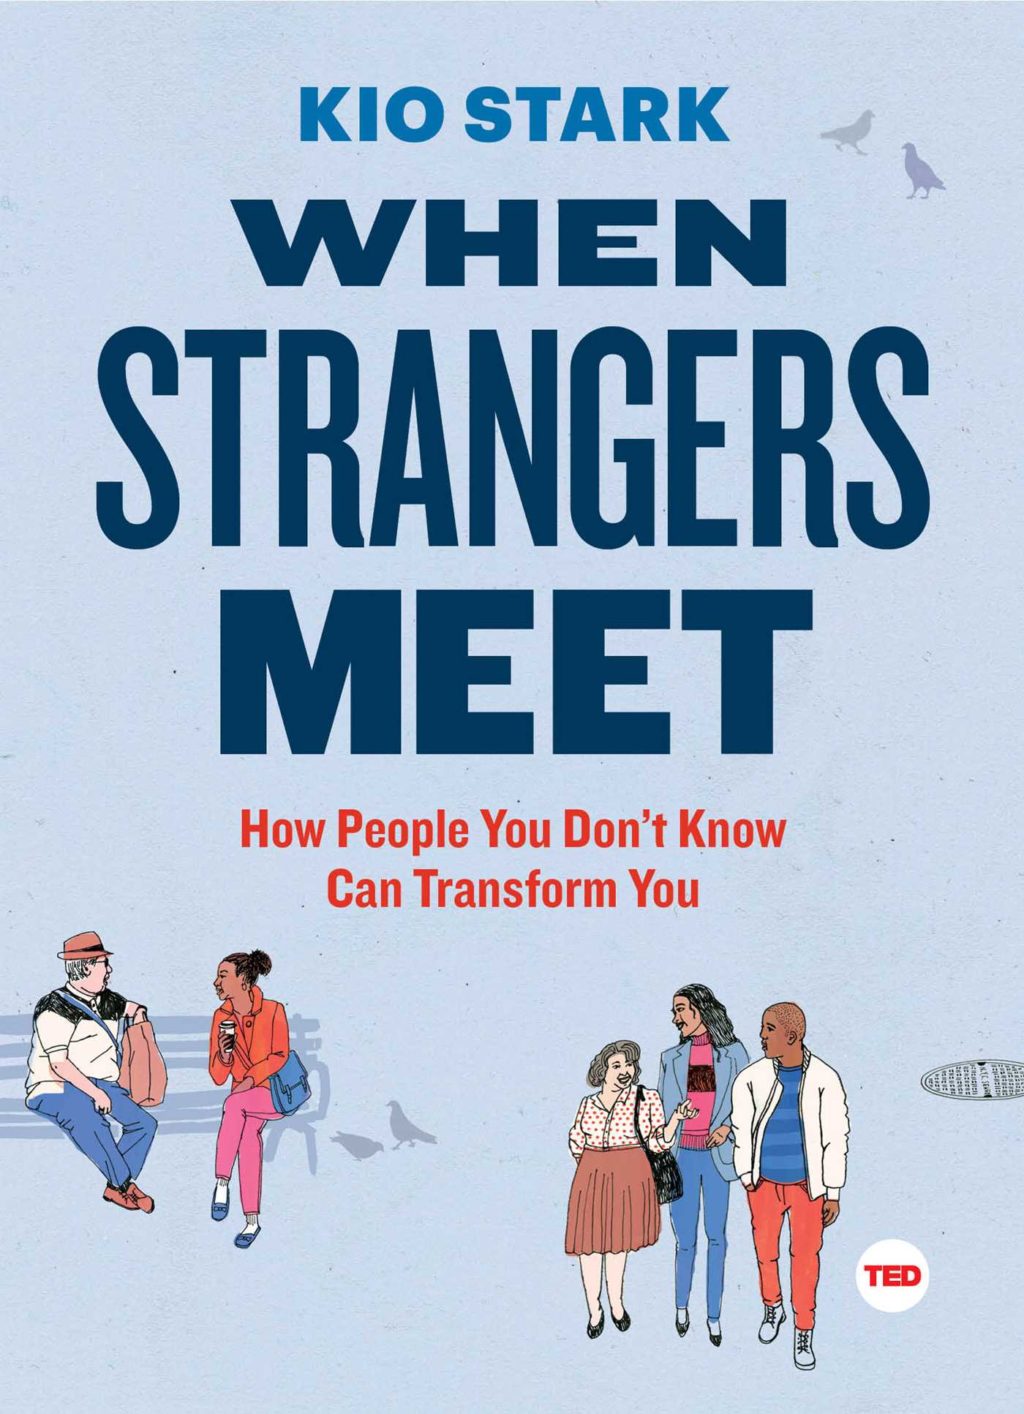 People you know. We meet at stranger. Meeting strangers